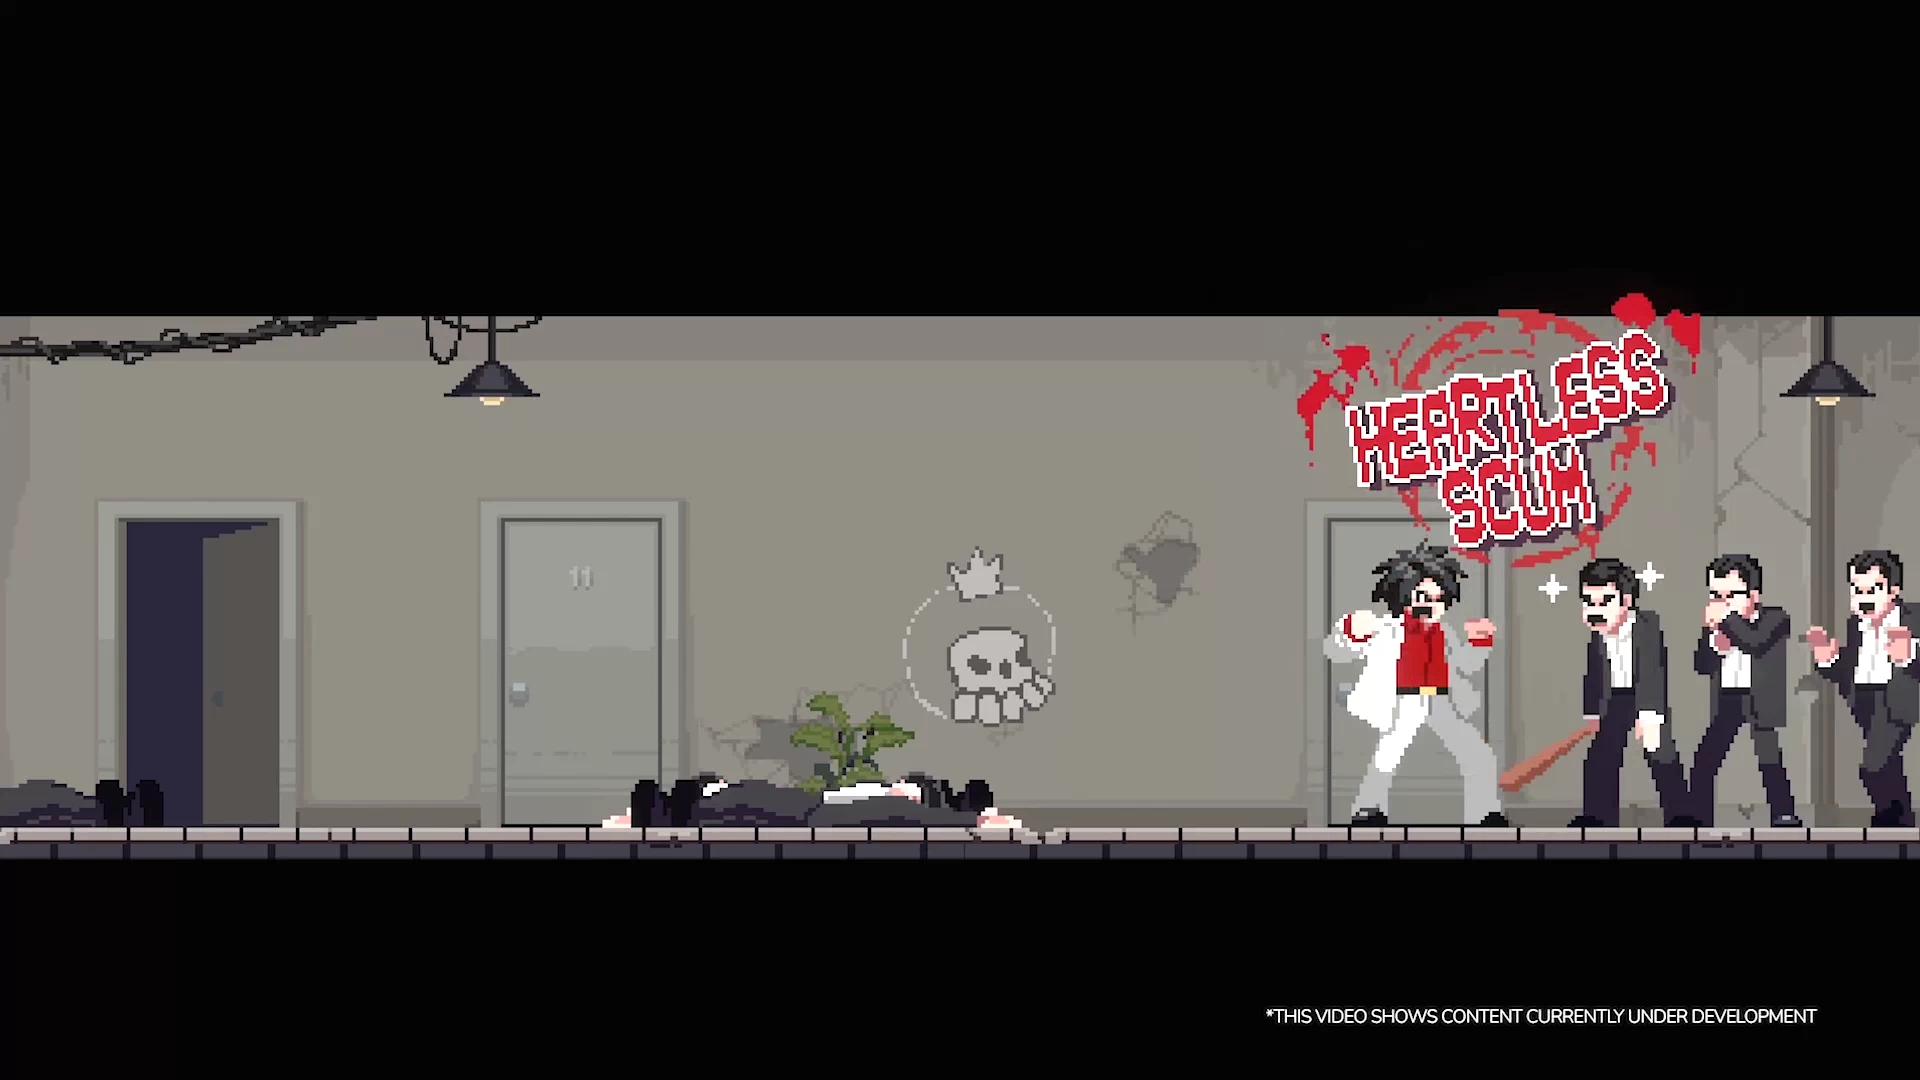 Vengeance of Mr. Peppermint Download - GameFabrique